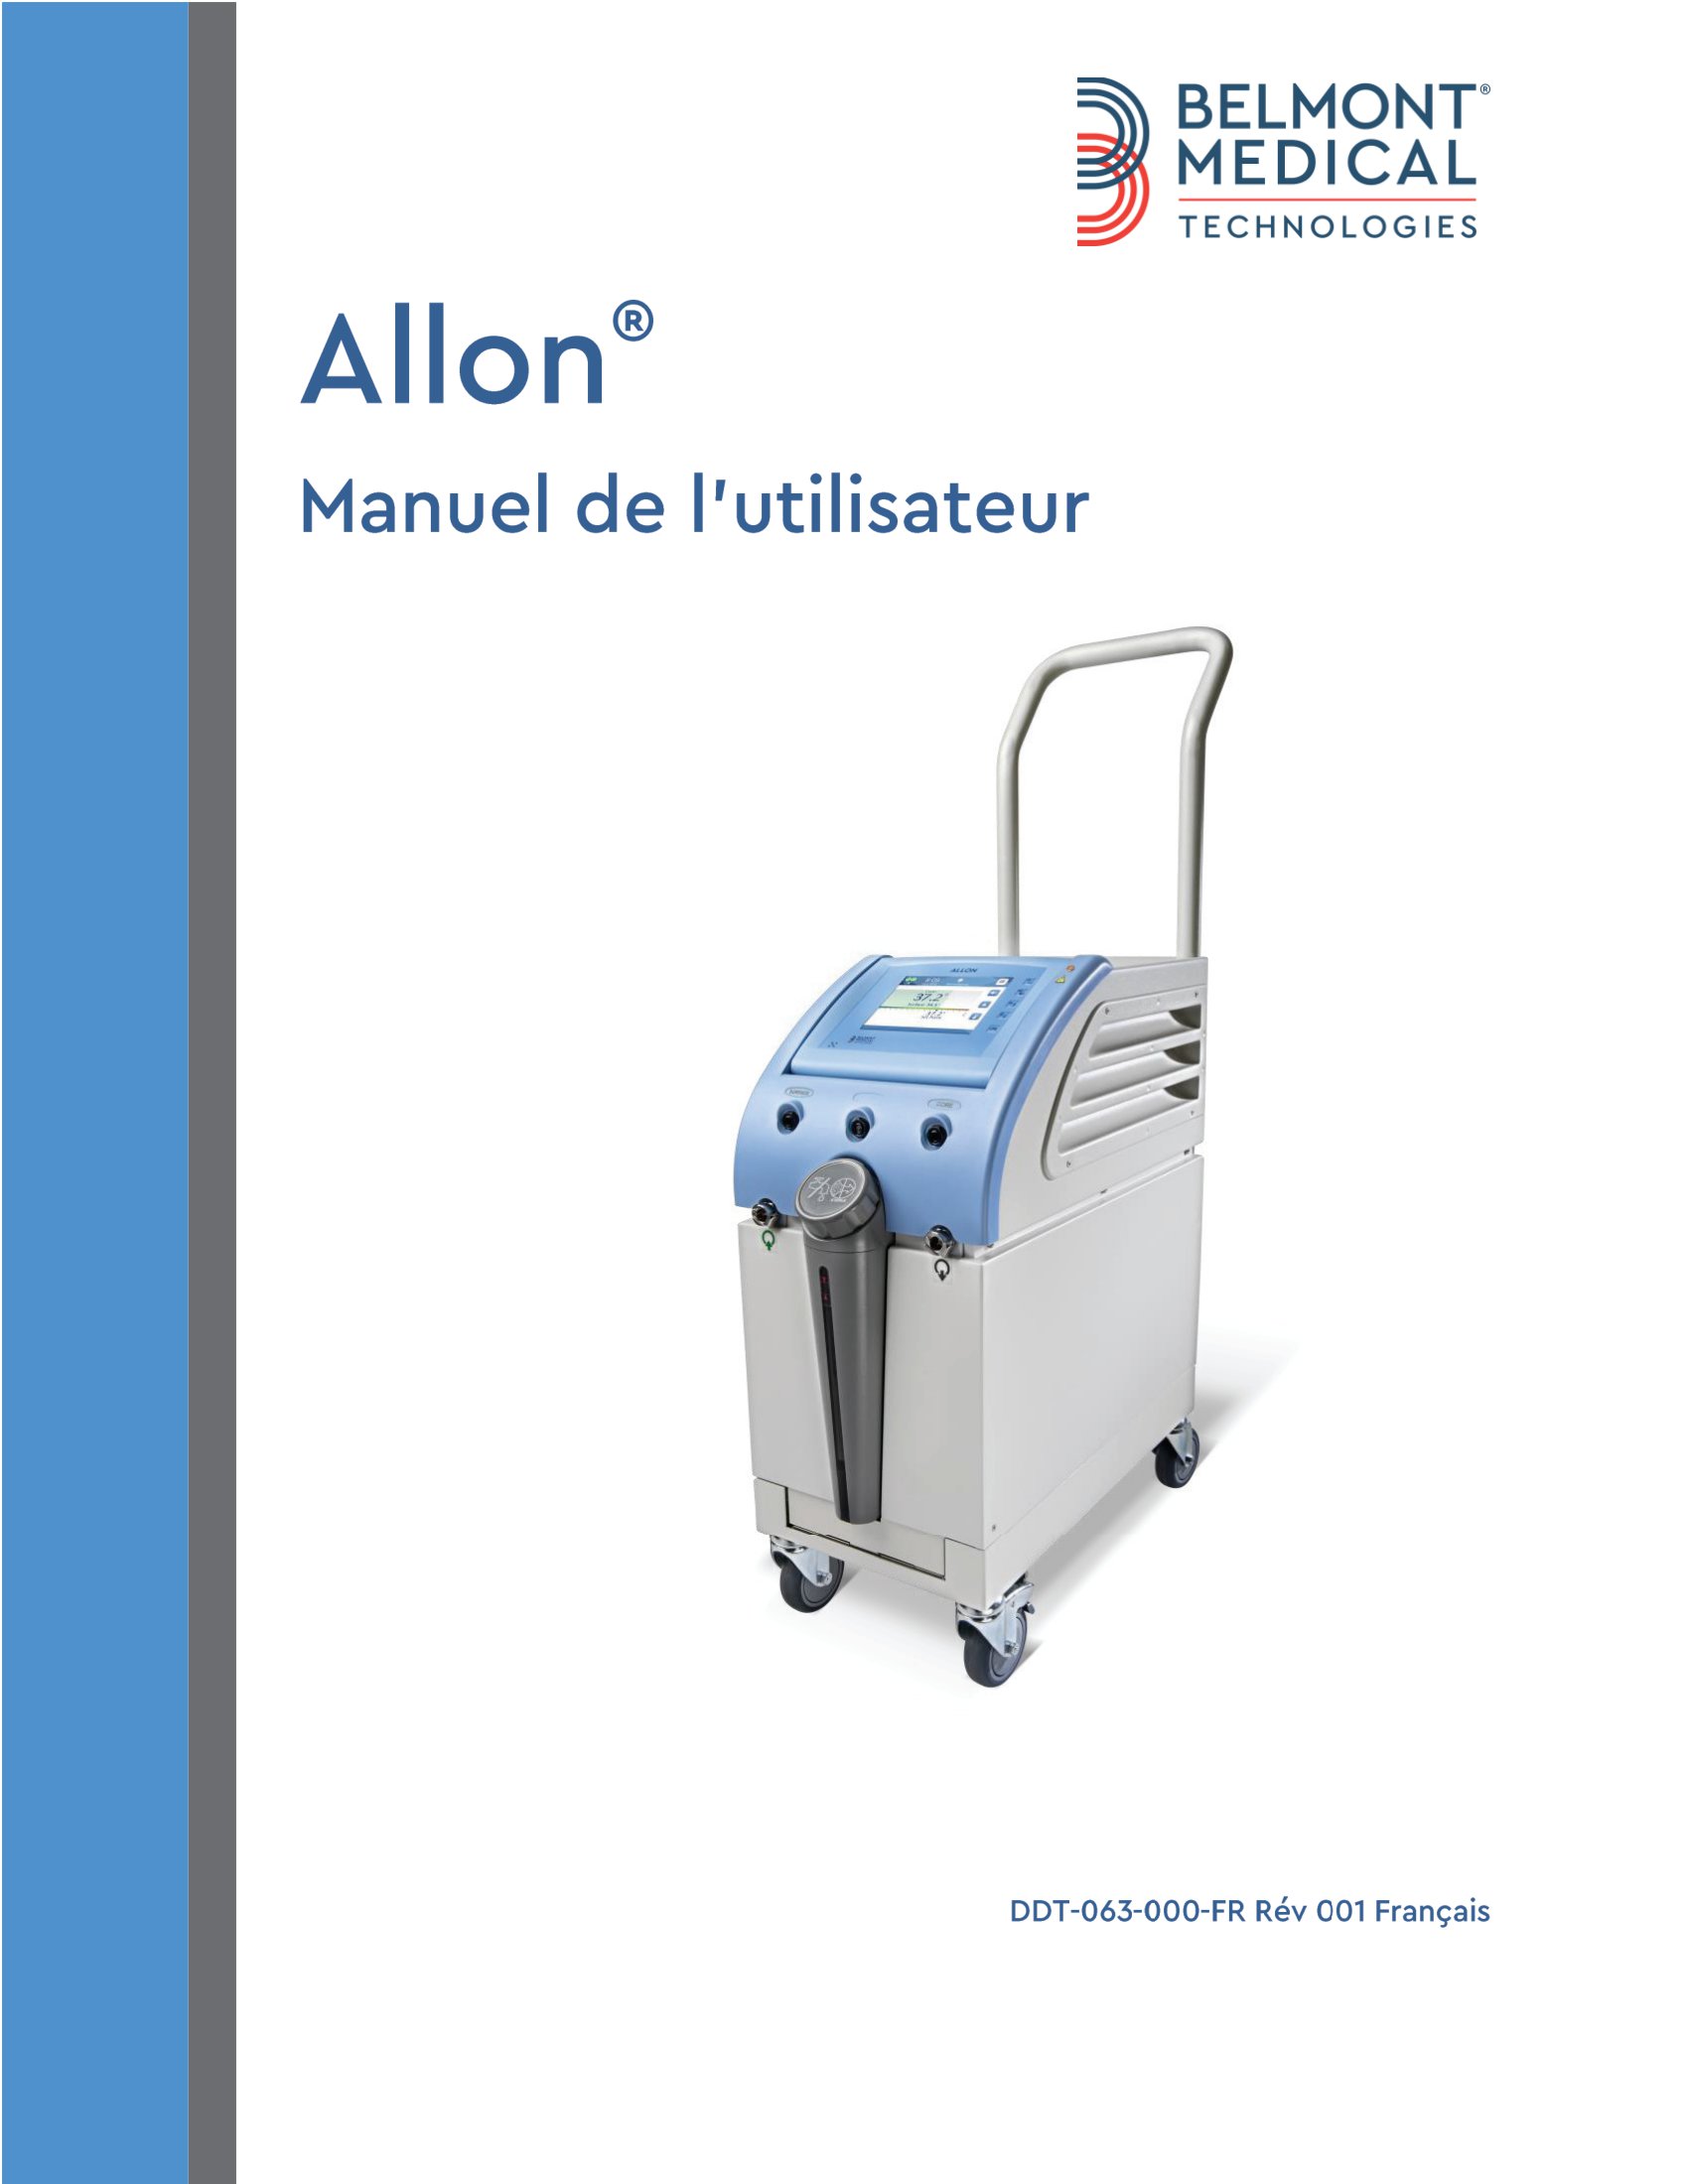 Allon 6.2 User Manual (French)